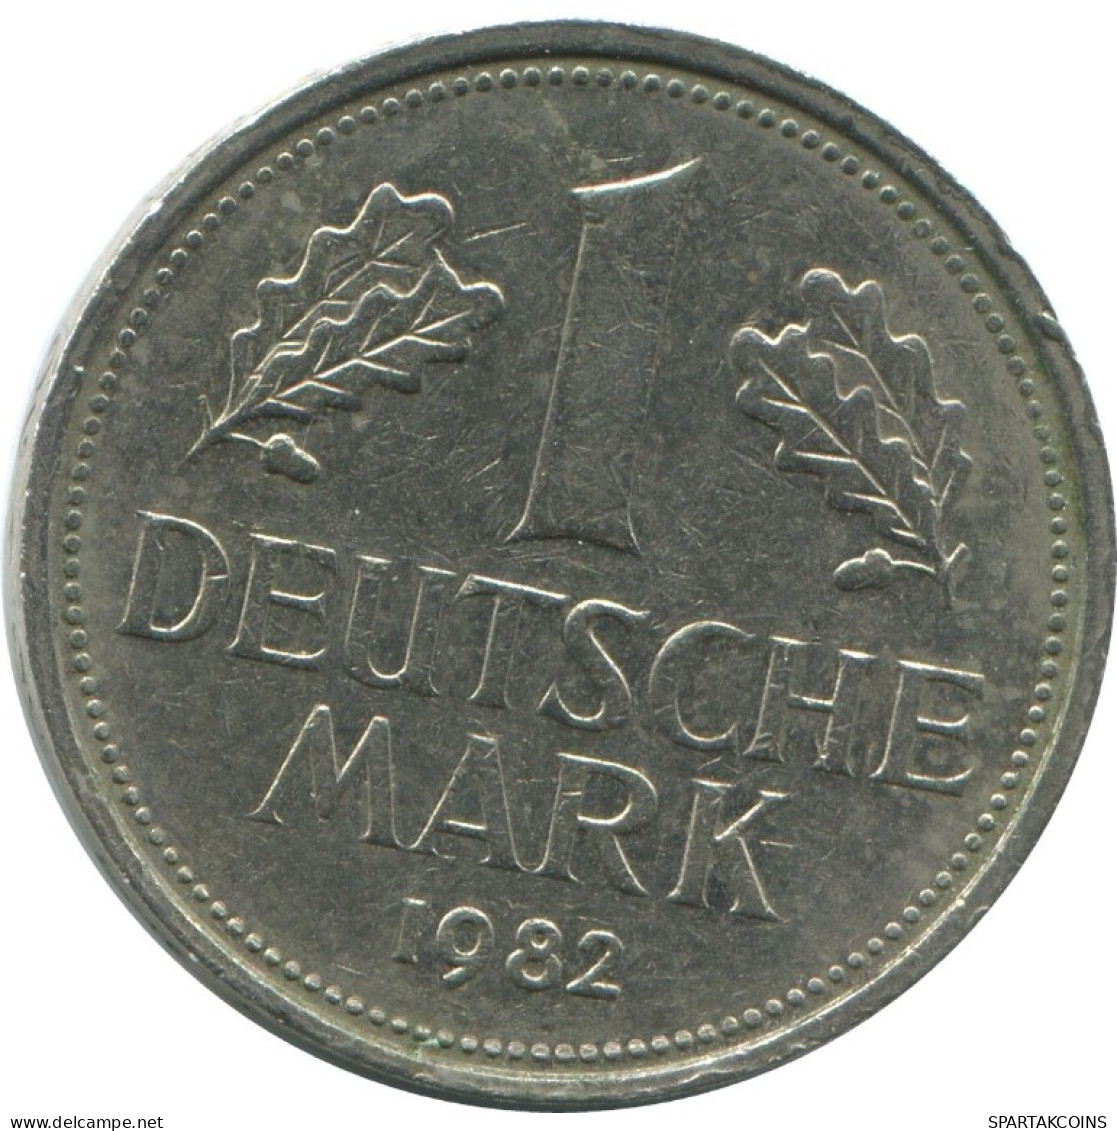 1 DM 1982 J BRD ALEMANIA Moneda GERMANY #AG299.3.E.A - 1 Mark